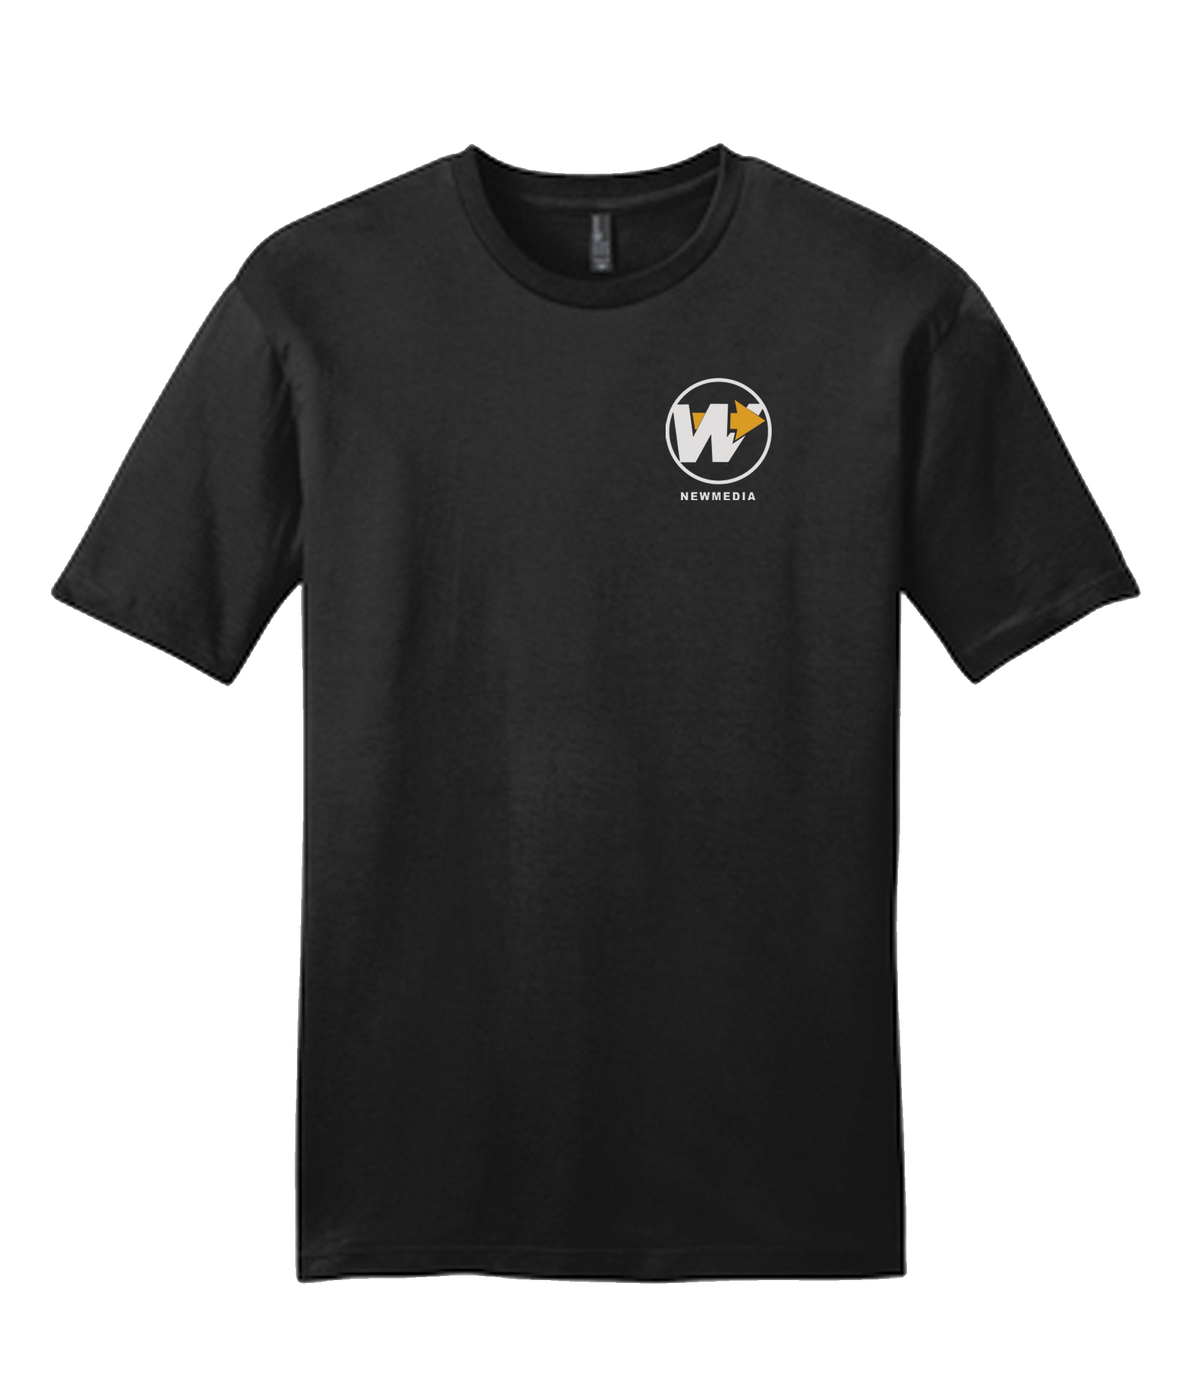 TWSN New Media Pocket Logo T-shirt In The Clutch